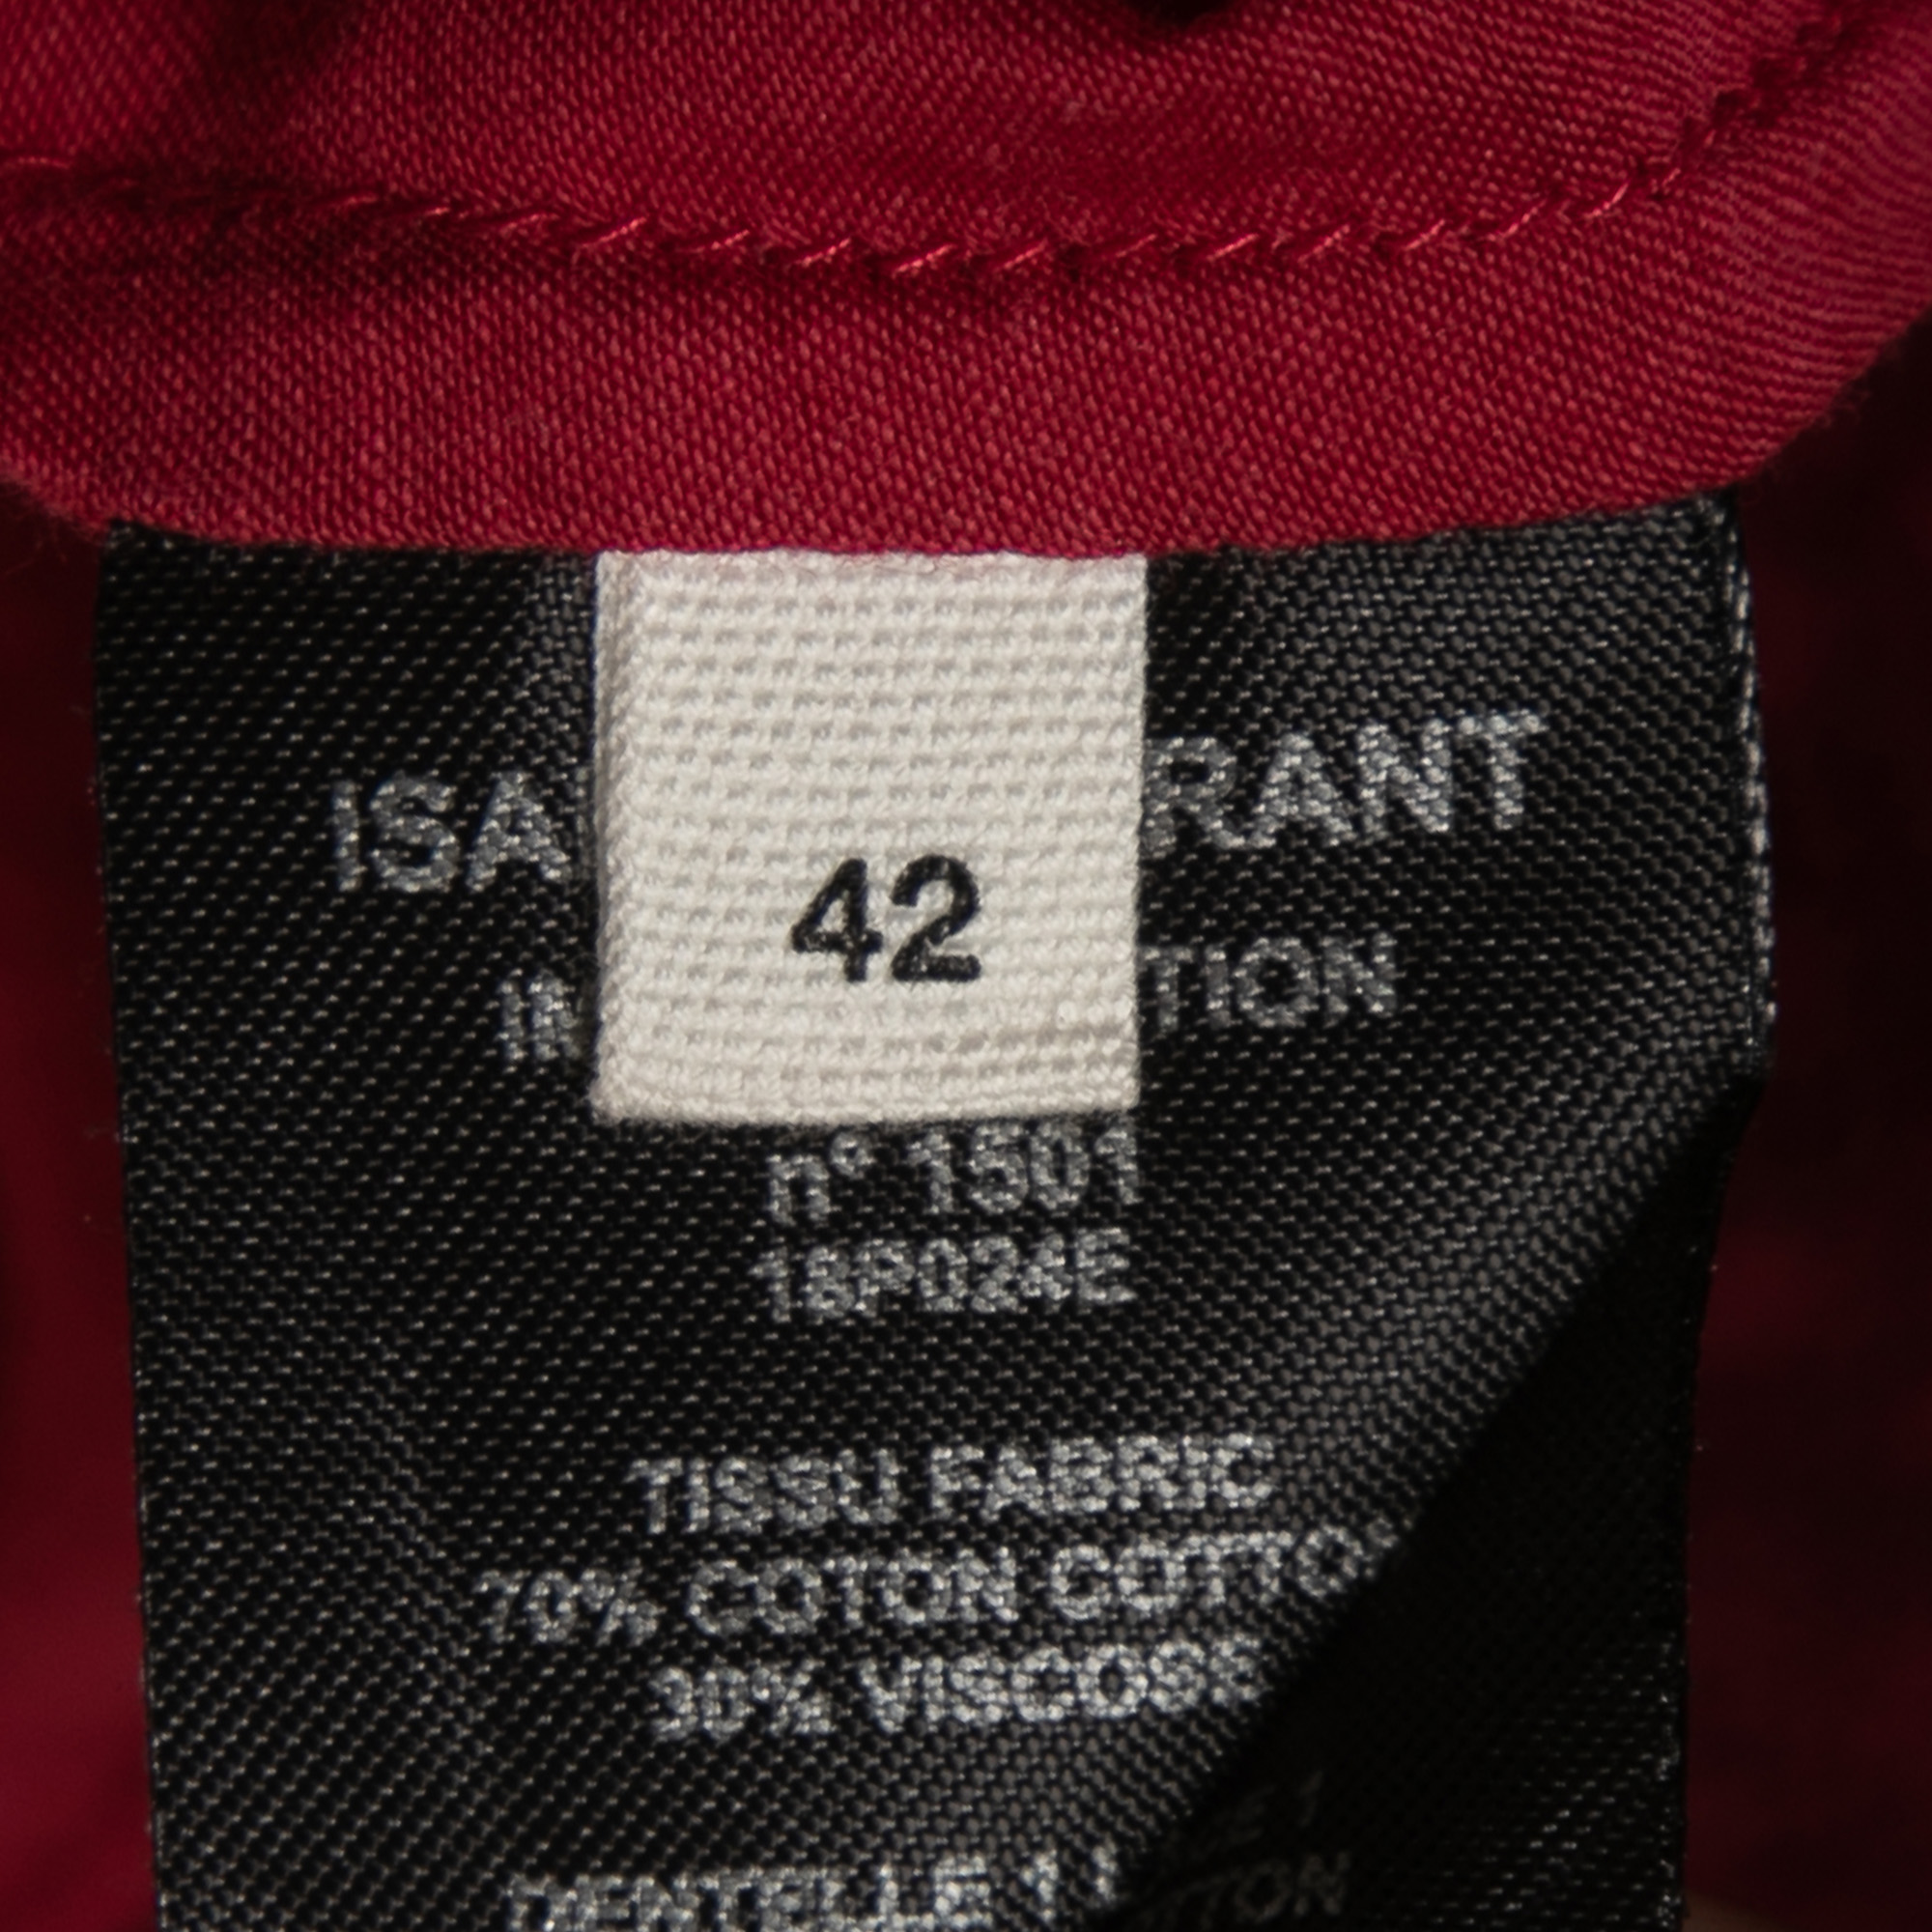 Isabel Marant Etoile Red Cotton Lace Trimmed Mini Dress M